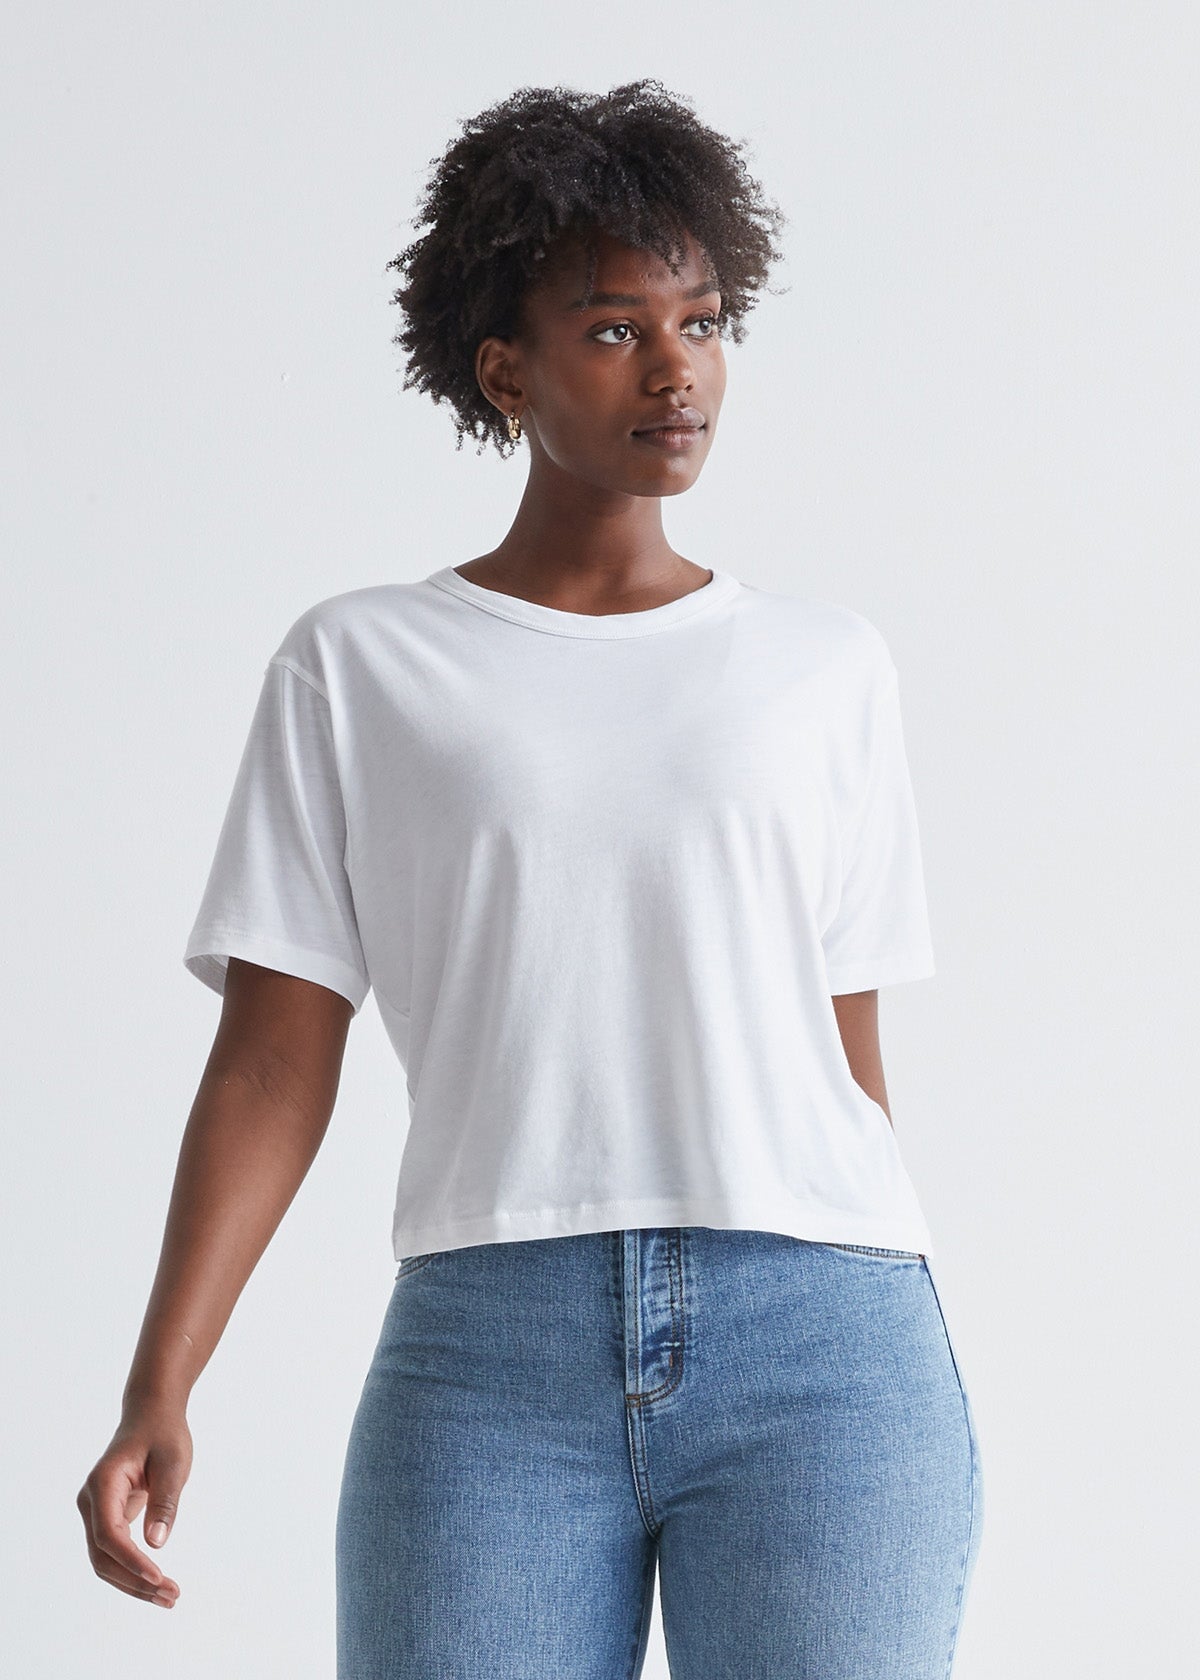 Sexy Black Crop Top T Shirt Women Summer Fashion T-shirt with